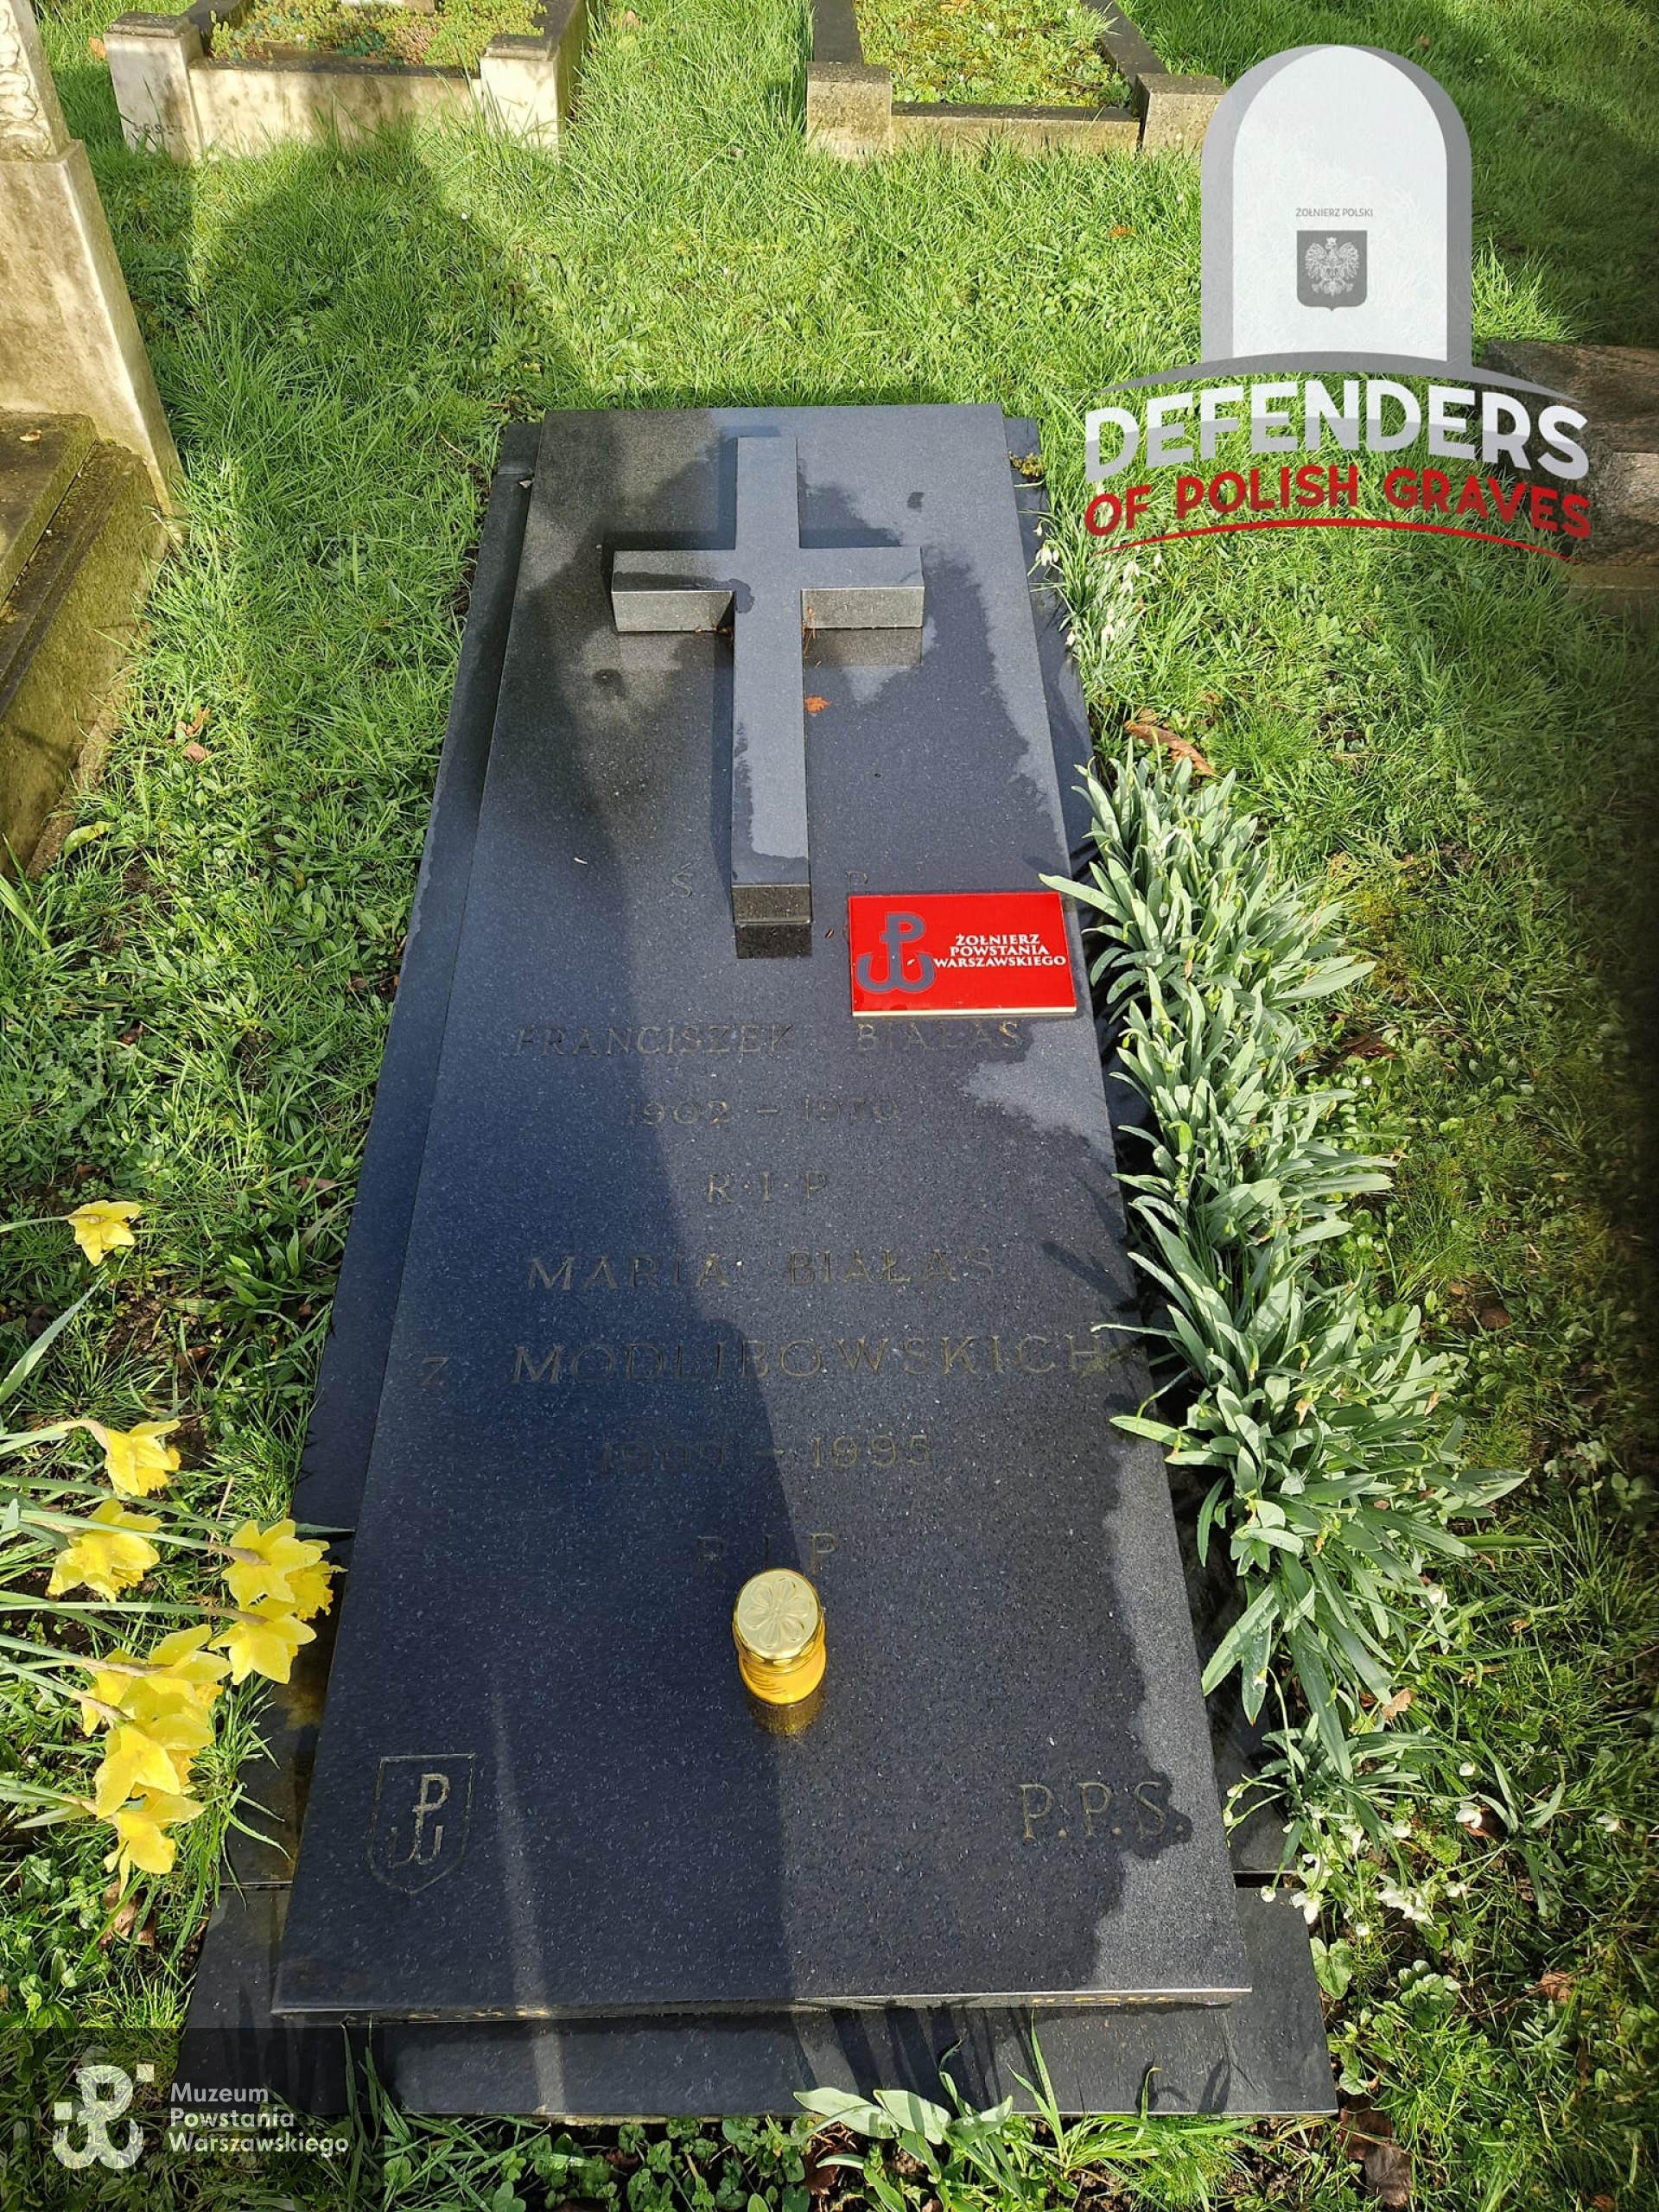 Cmentarz South Ealing w Londynie. Źr.fot.: Defenders of Polish Graves London/Facebook